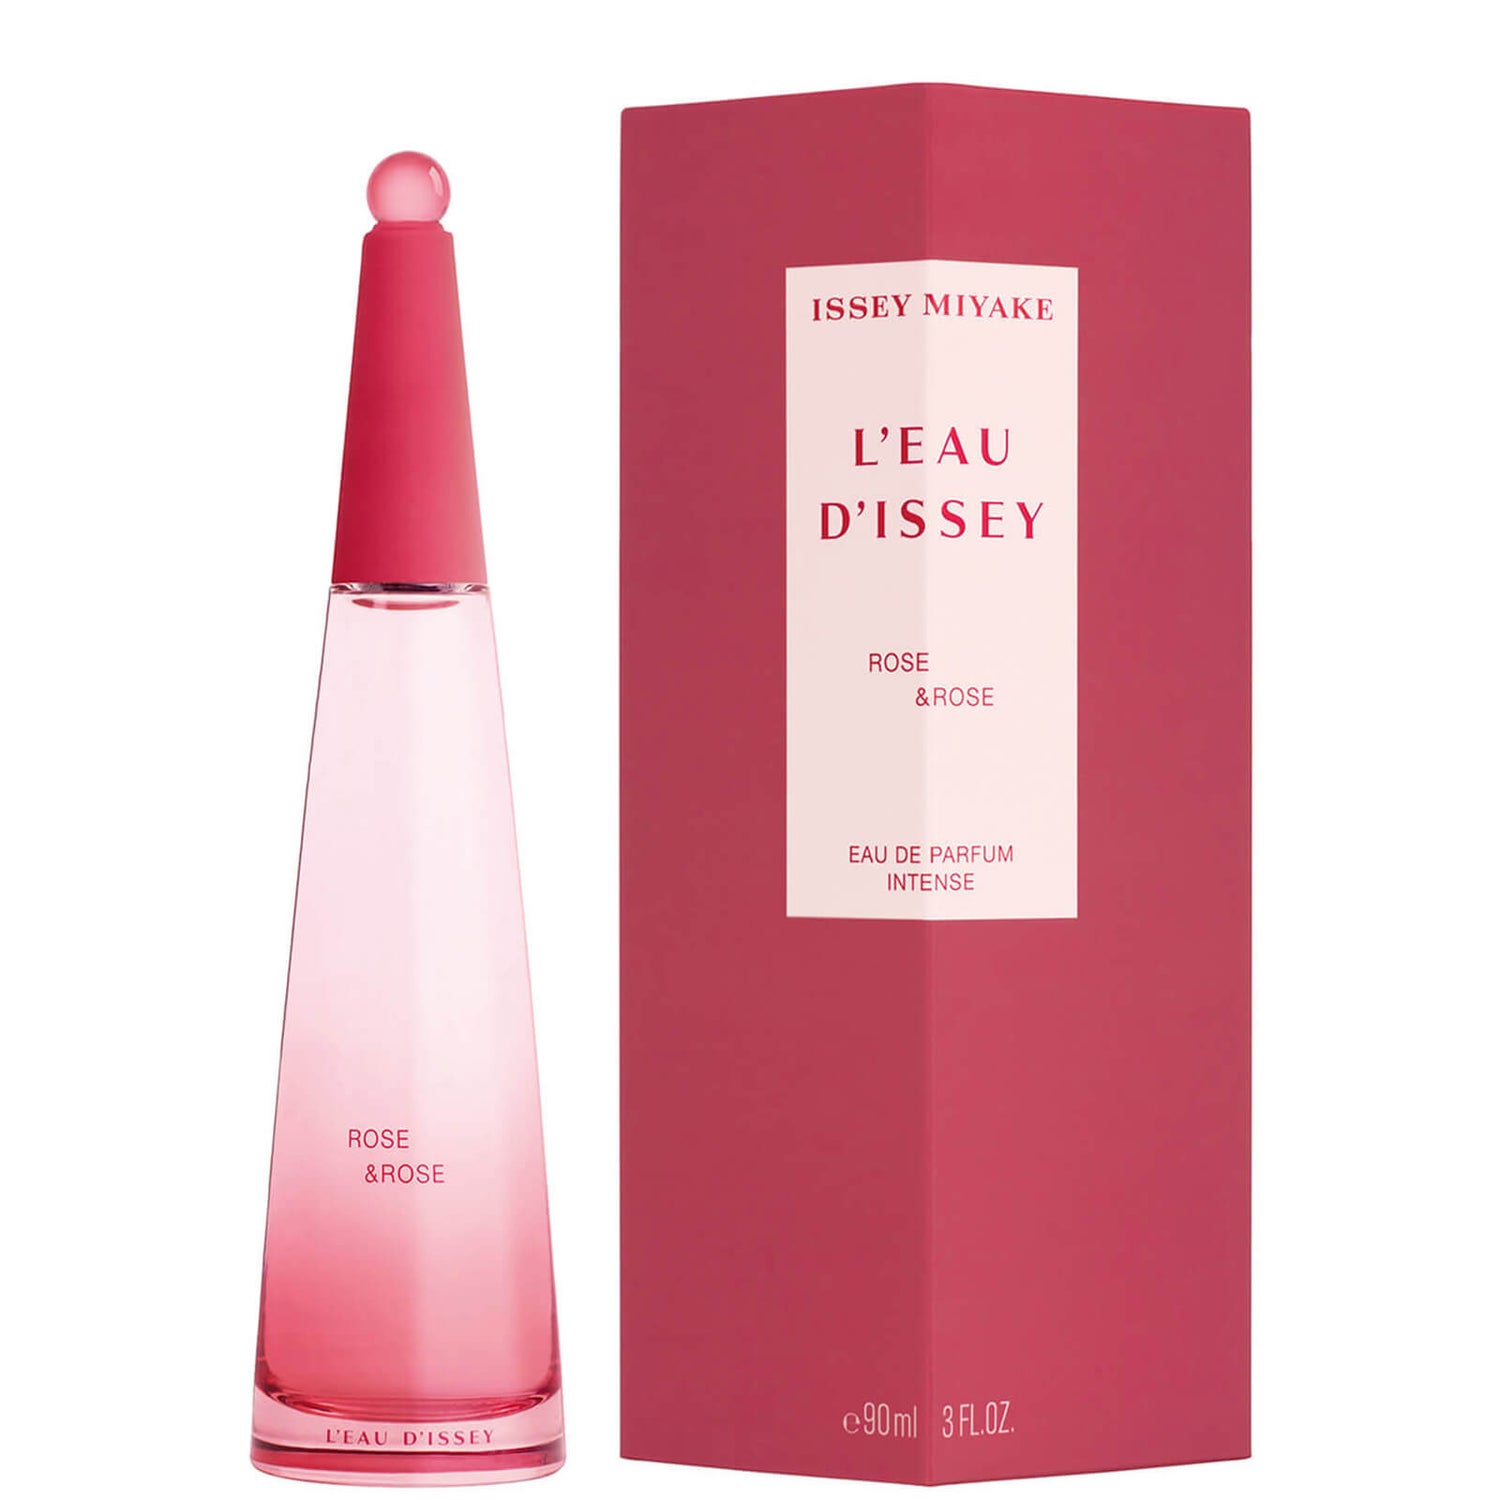 Eau de Parfum L'eau D'Issey Rose & Rose Intense Issey Miyake - 50ml